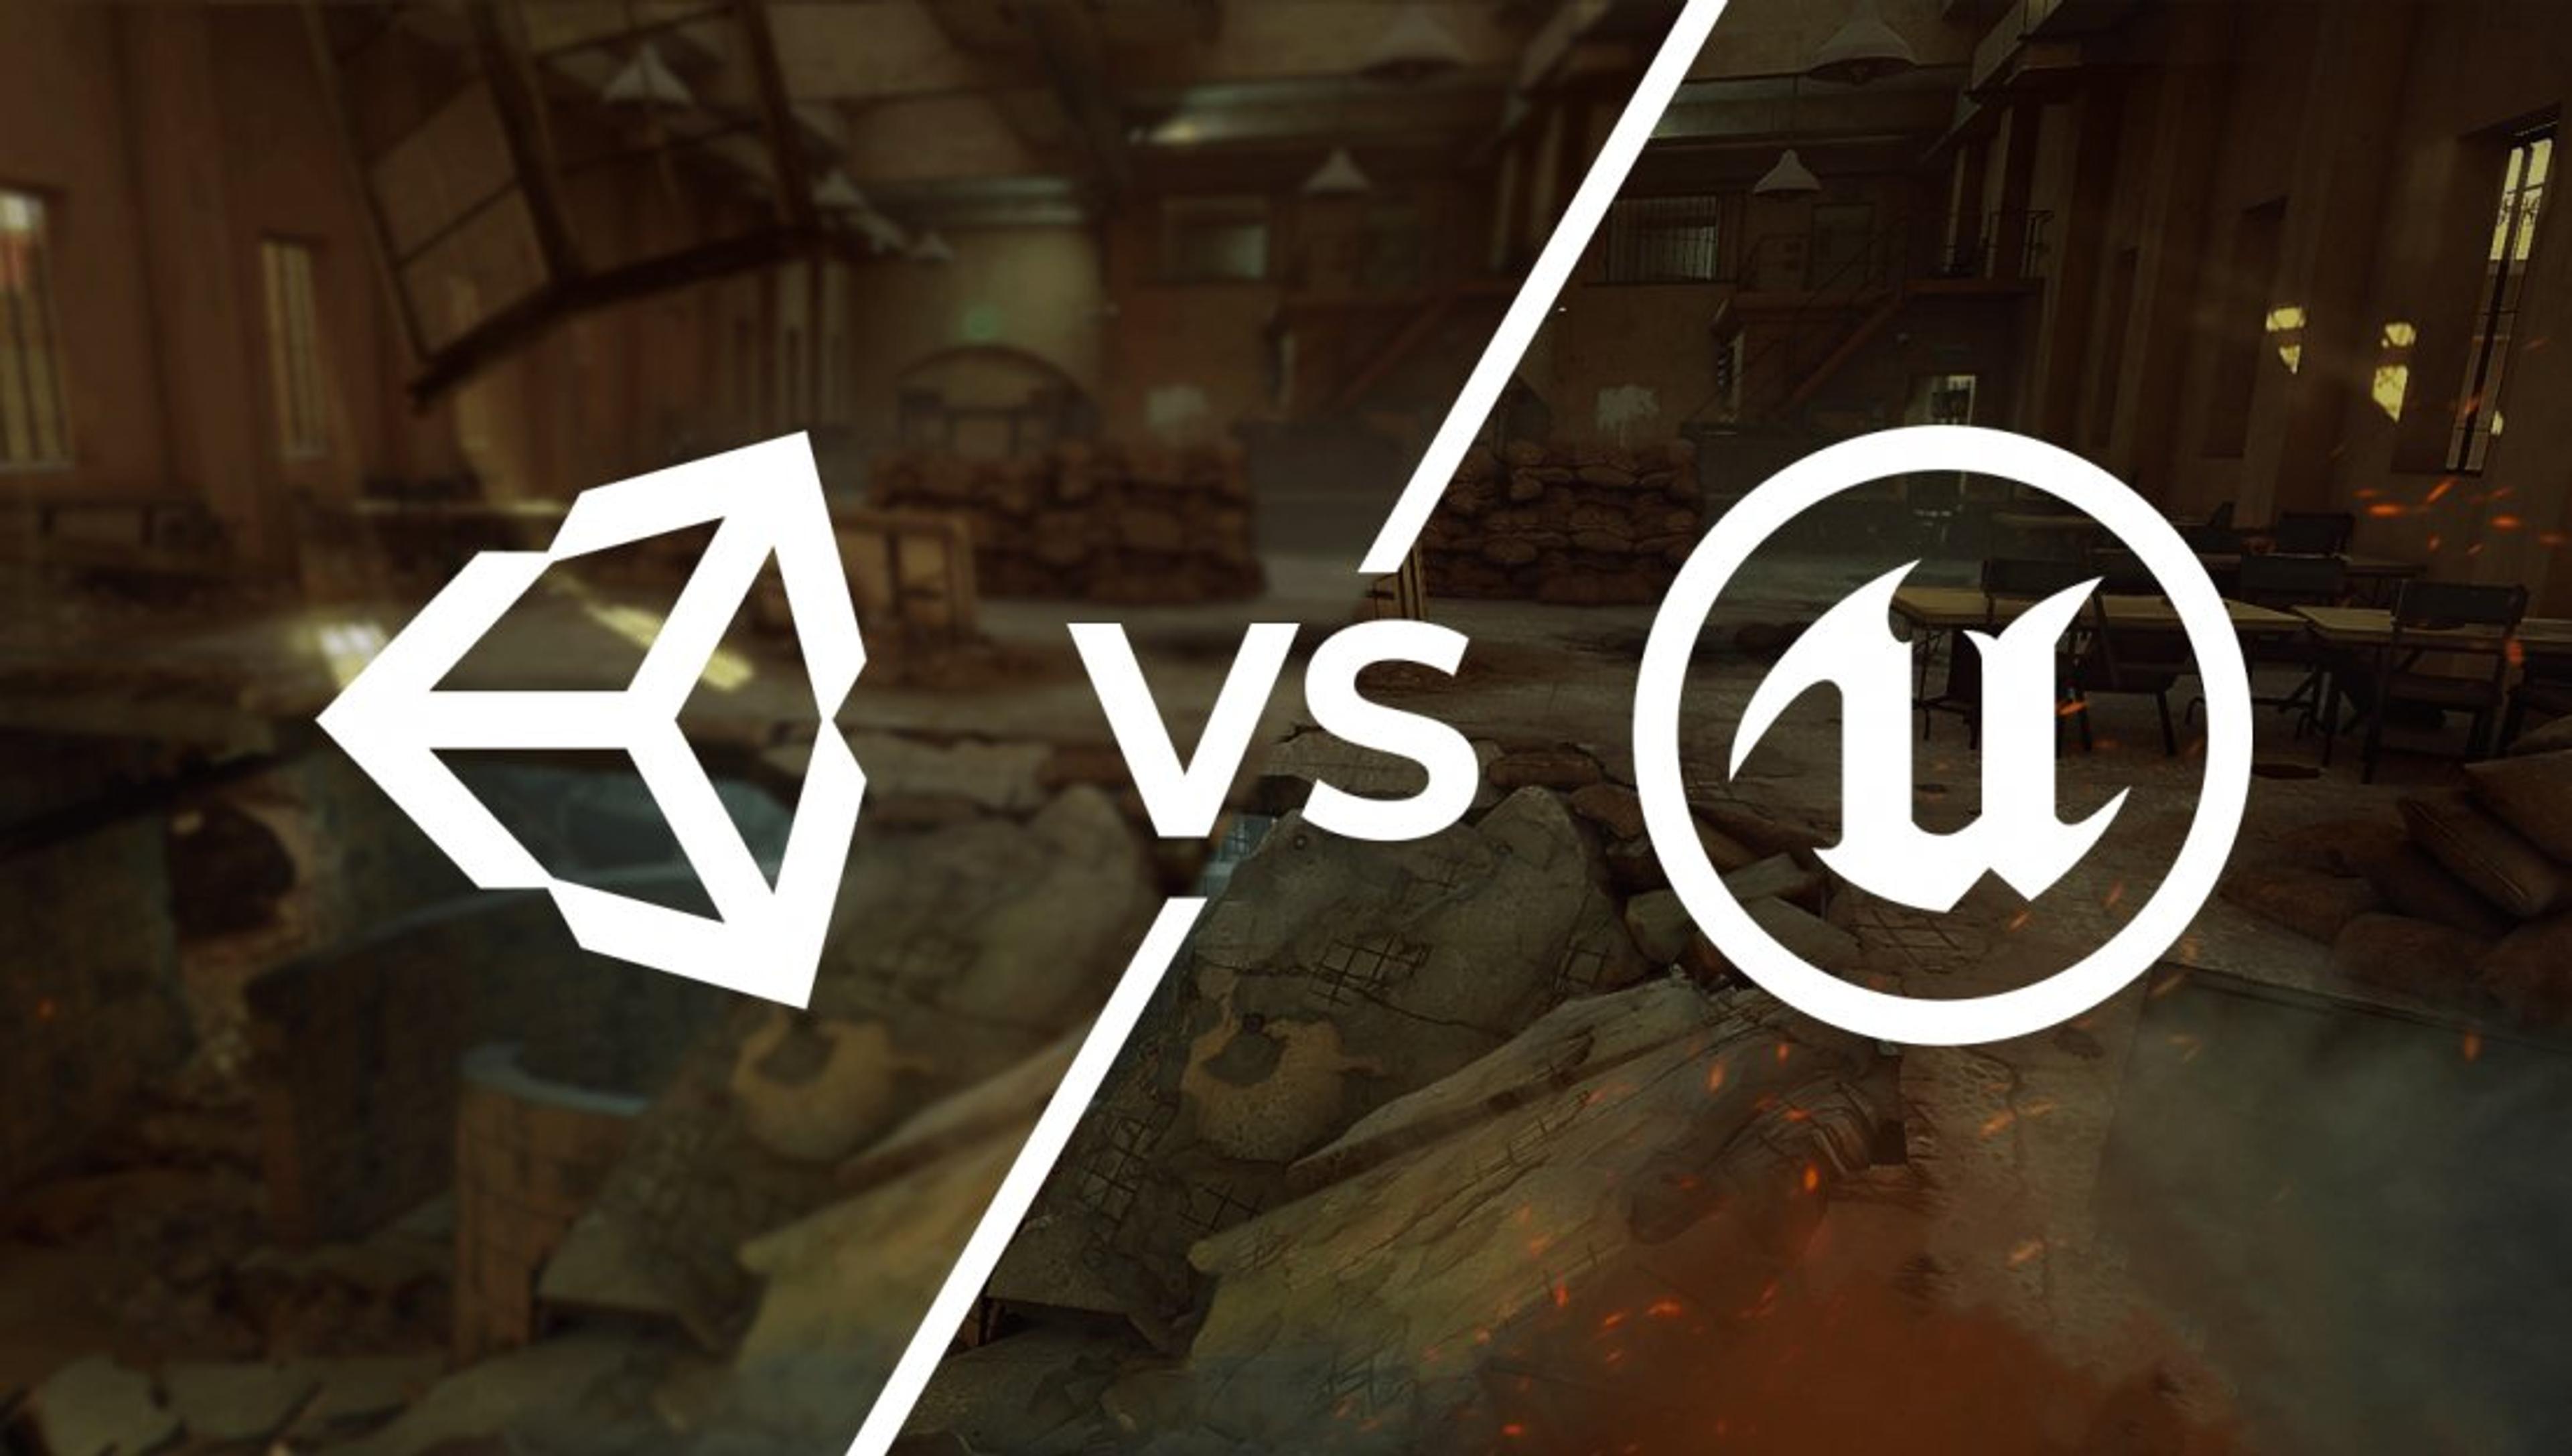 unity vs unreal engine